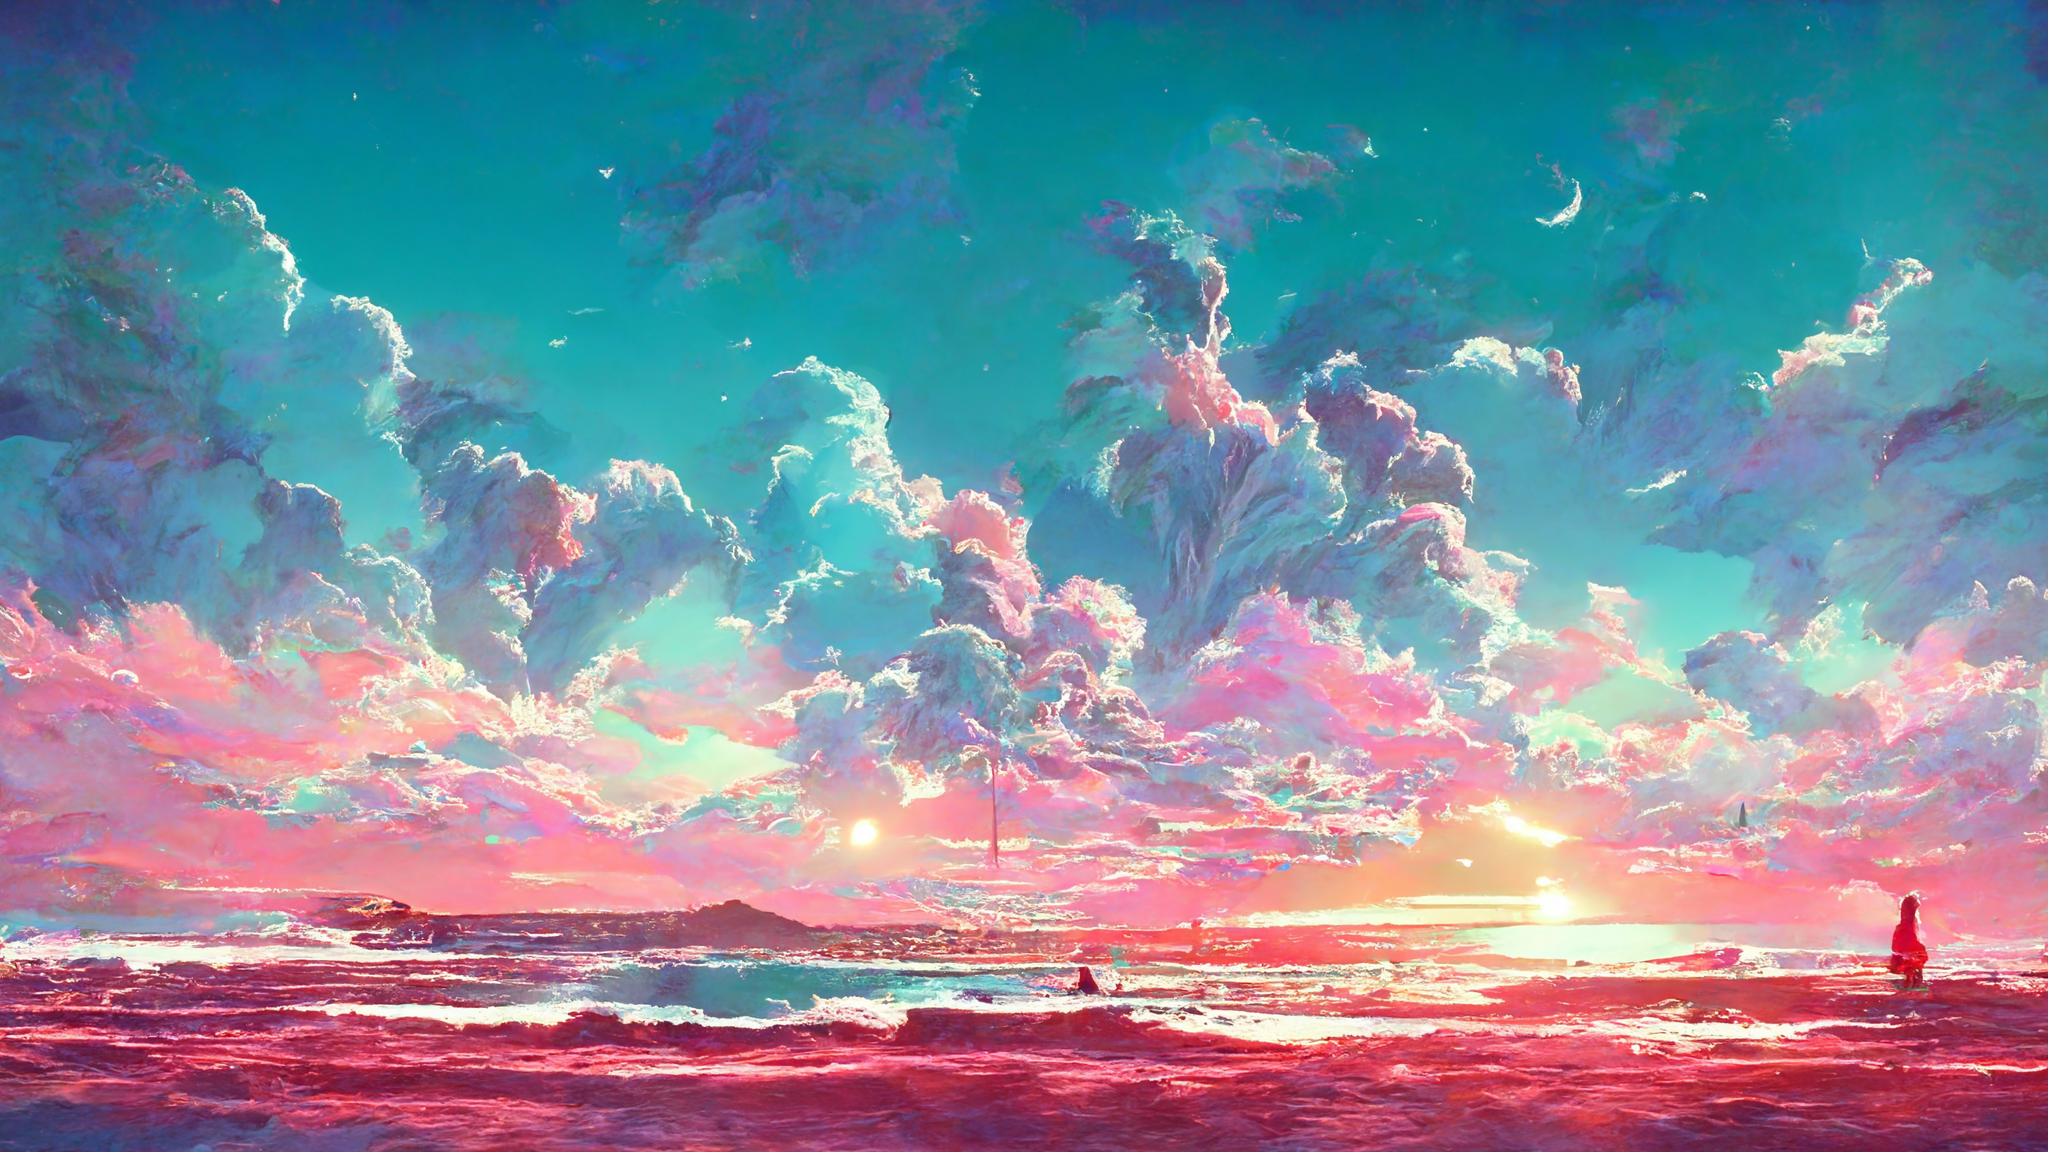 General 2048x1152 clouds vaporwave beach sunset sand Moon suns bright colorful pastel waves AI art